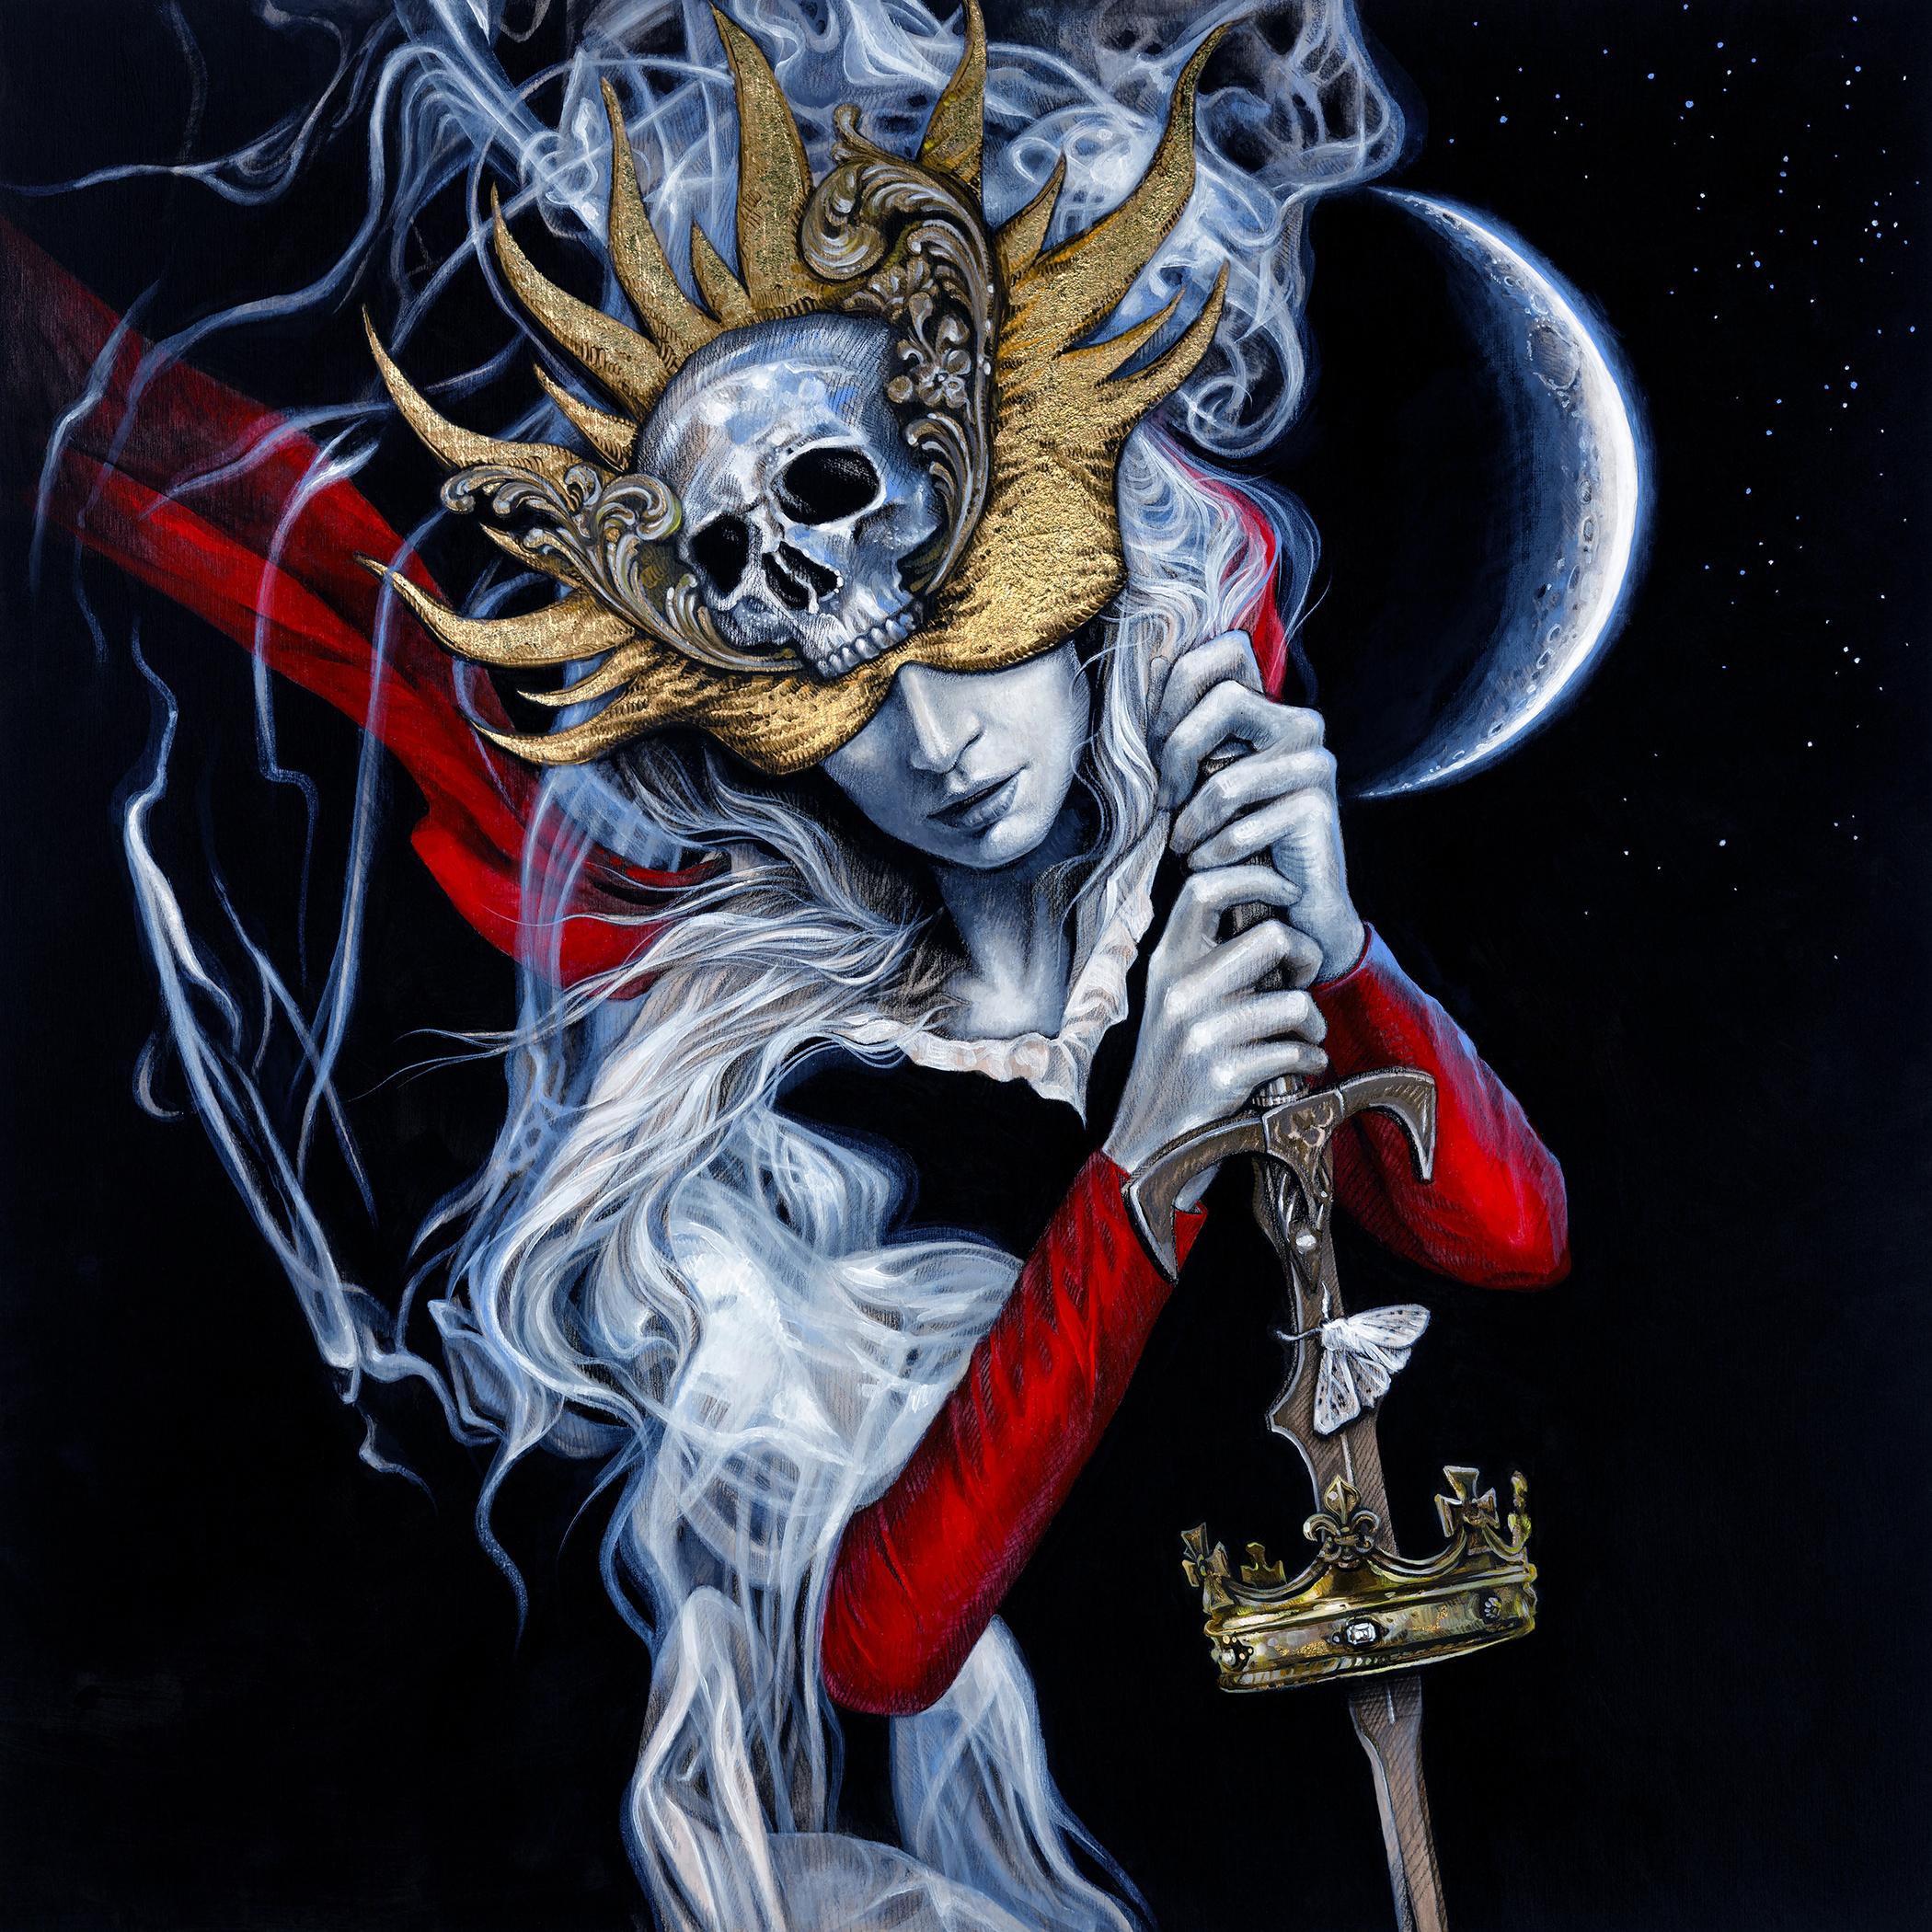 Magic Realism Figurative Artwork, "Queen of Swords" by Evgeniya Golik